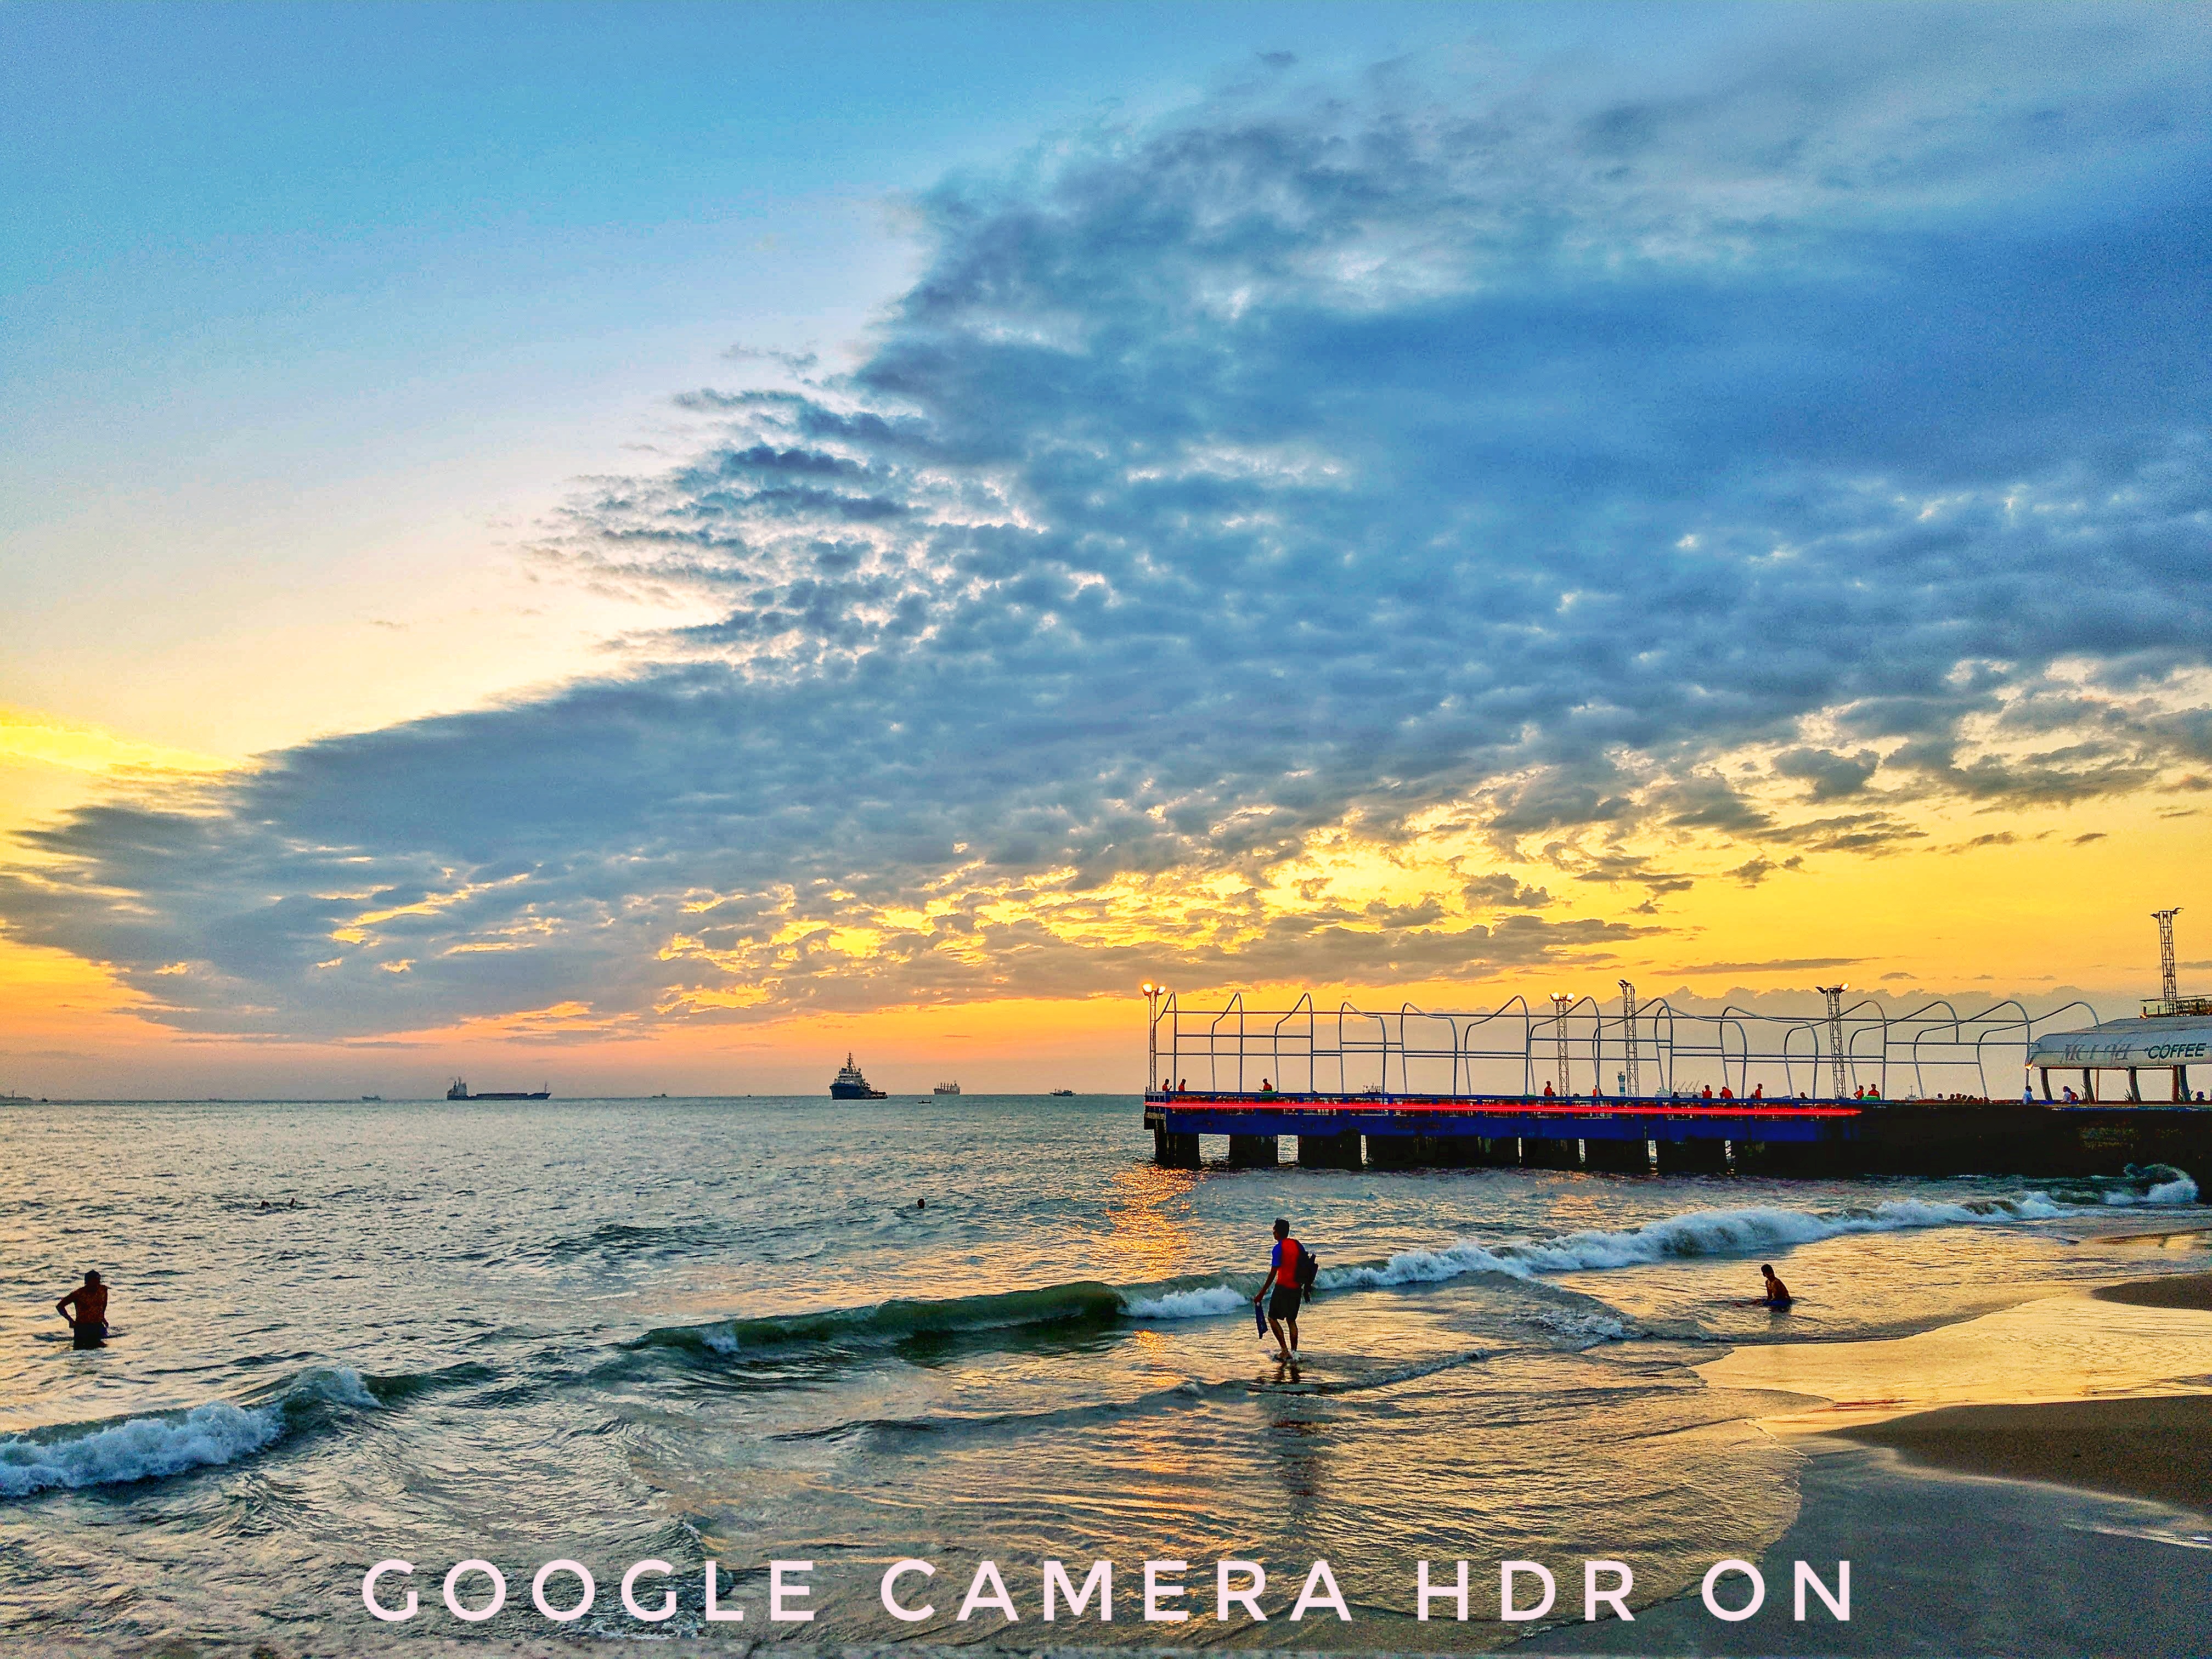 Google camera hdr on -01.jpeg